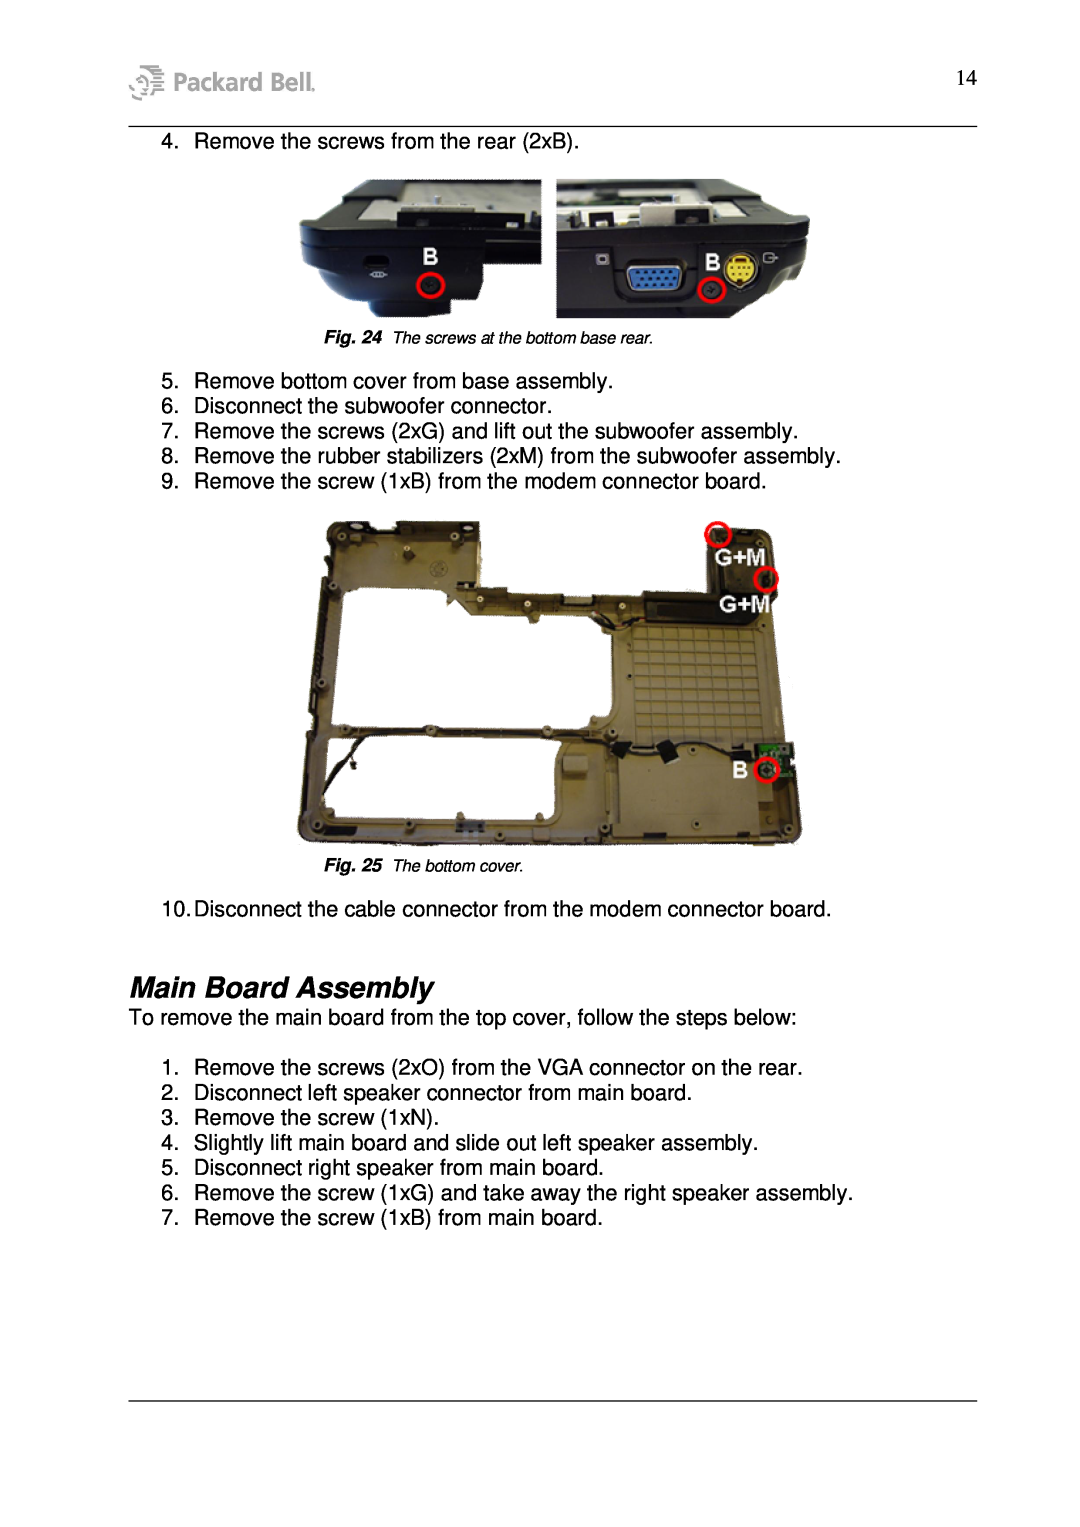 Packard Bell W7 manual Main Board Assembly 